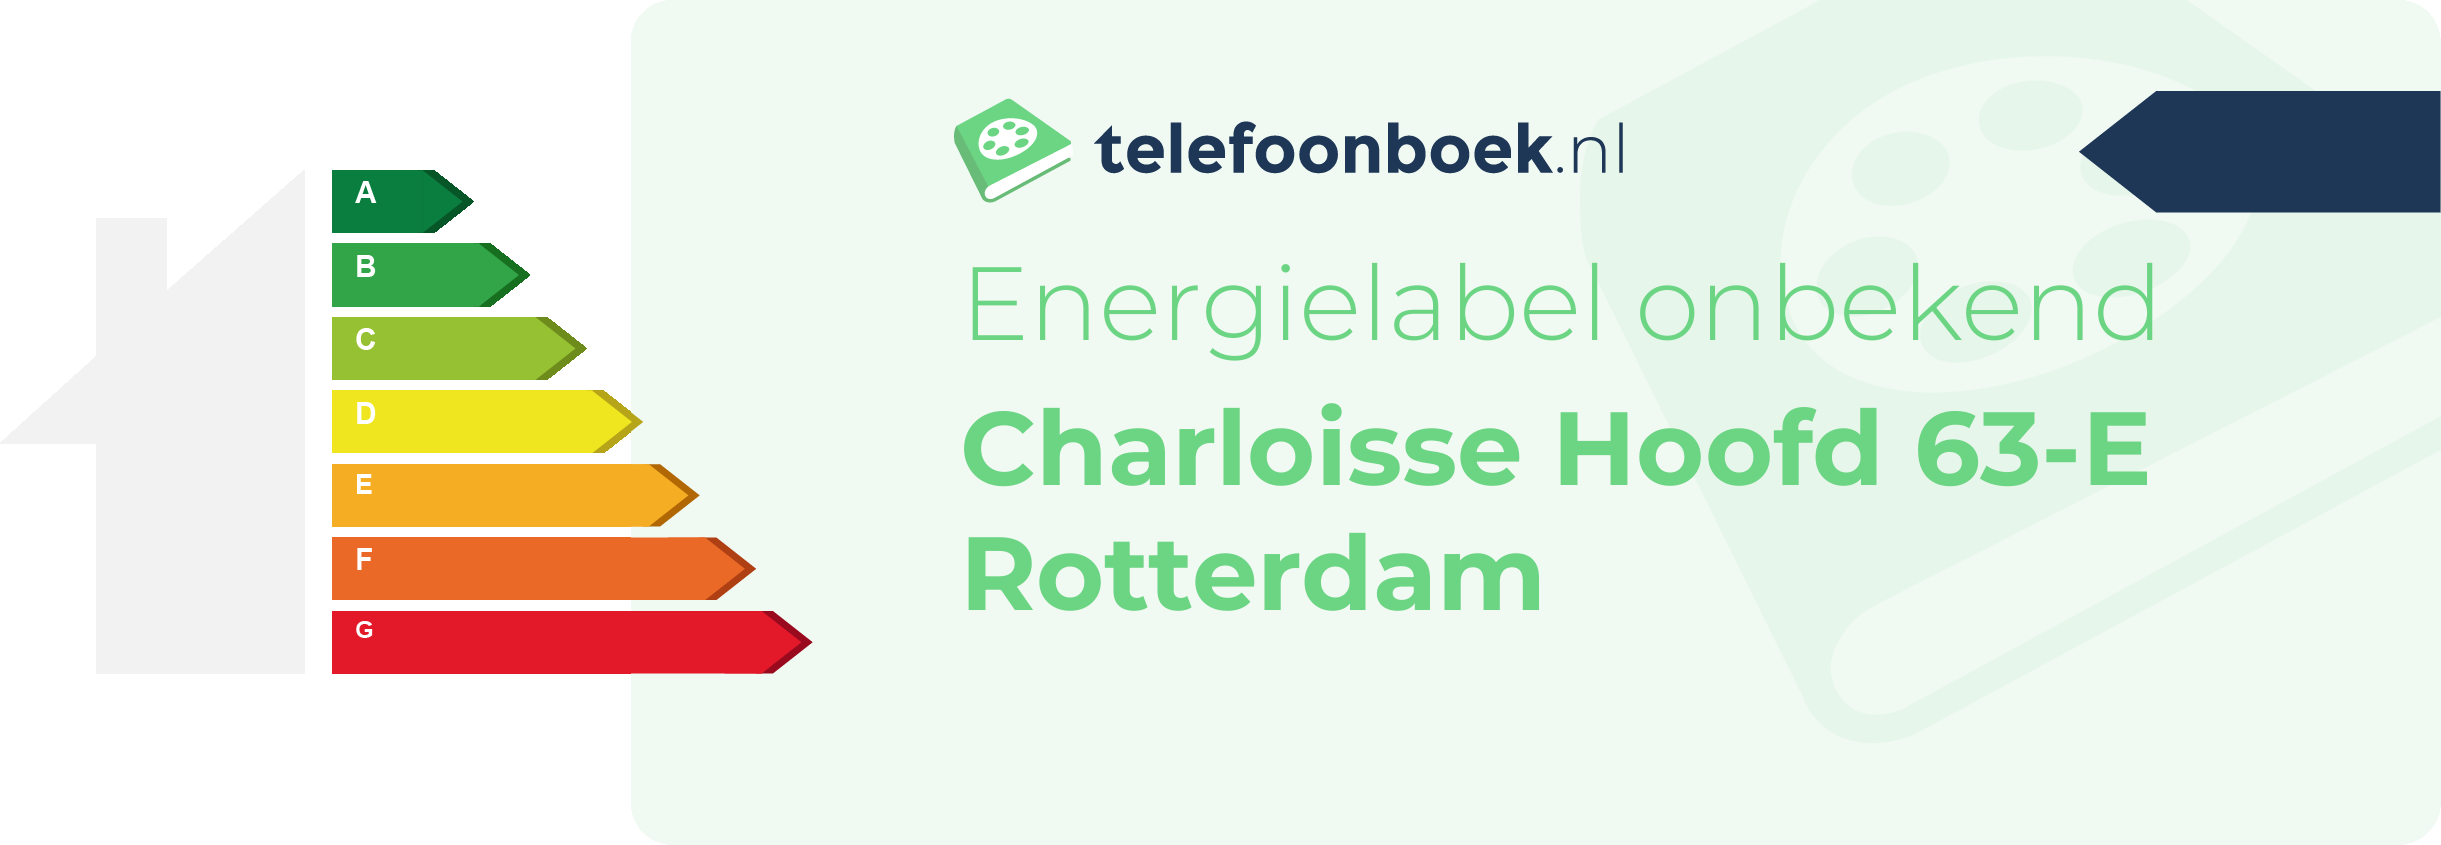 Energielabel Charloisse Hoofd 63-E Rotterdam